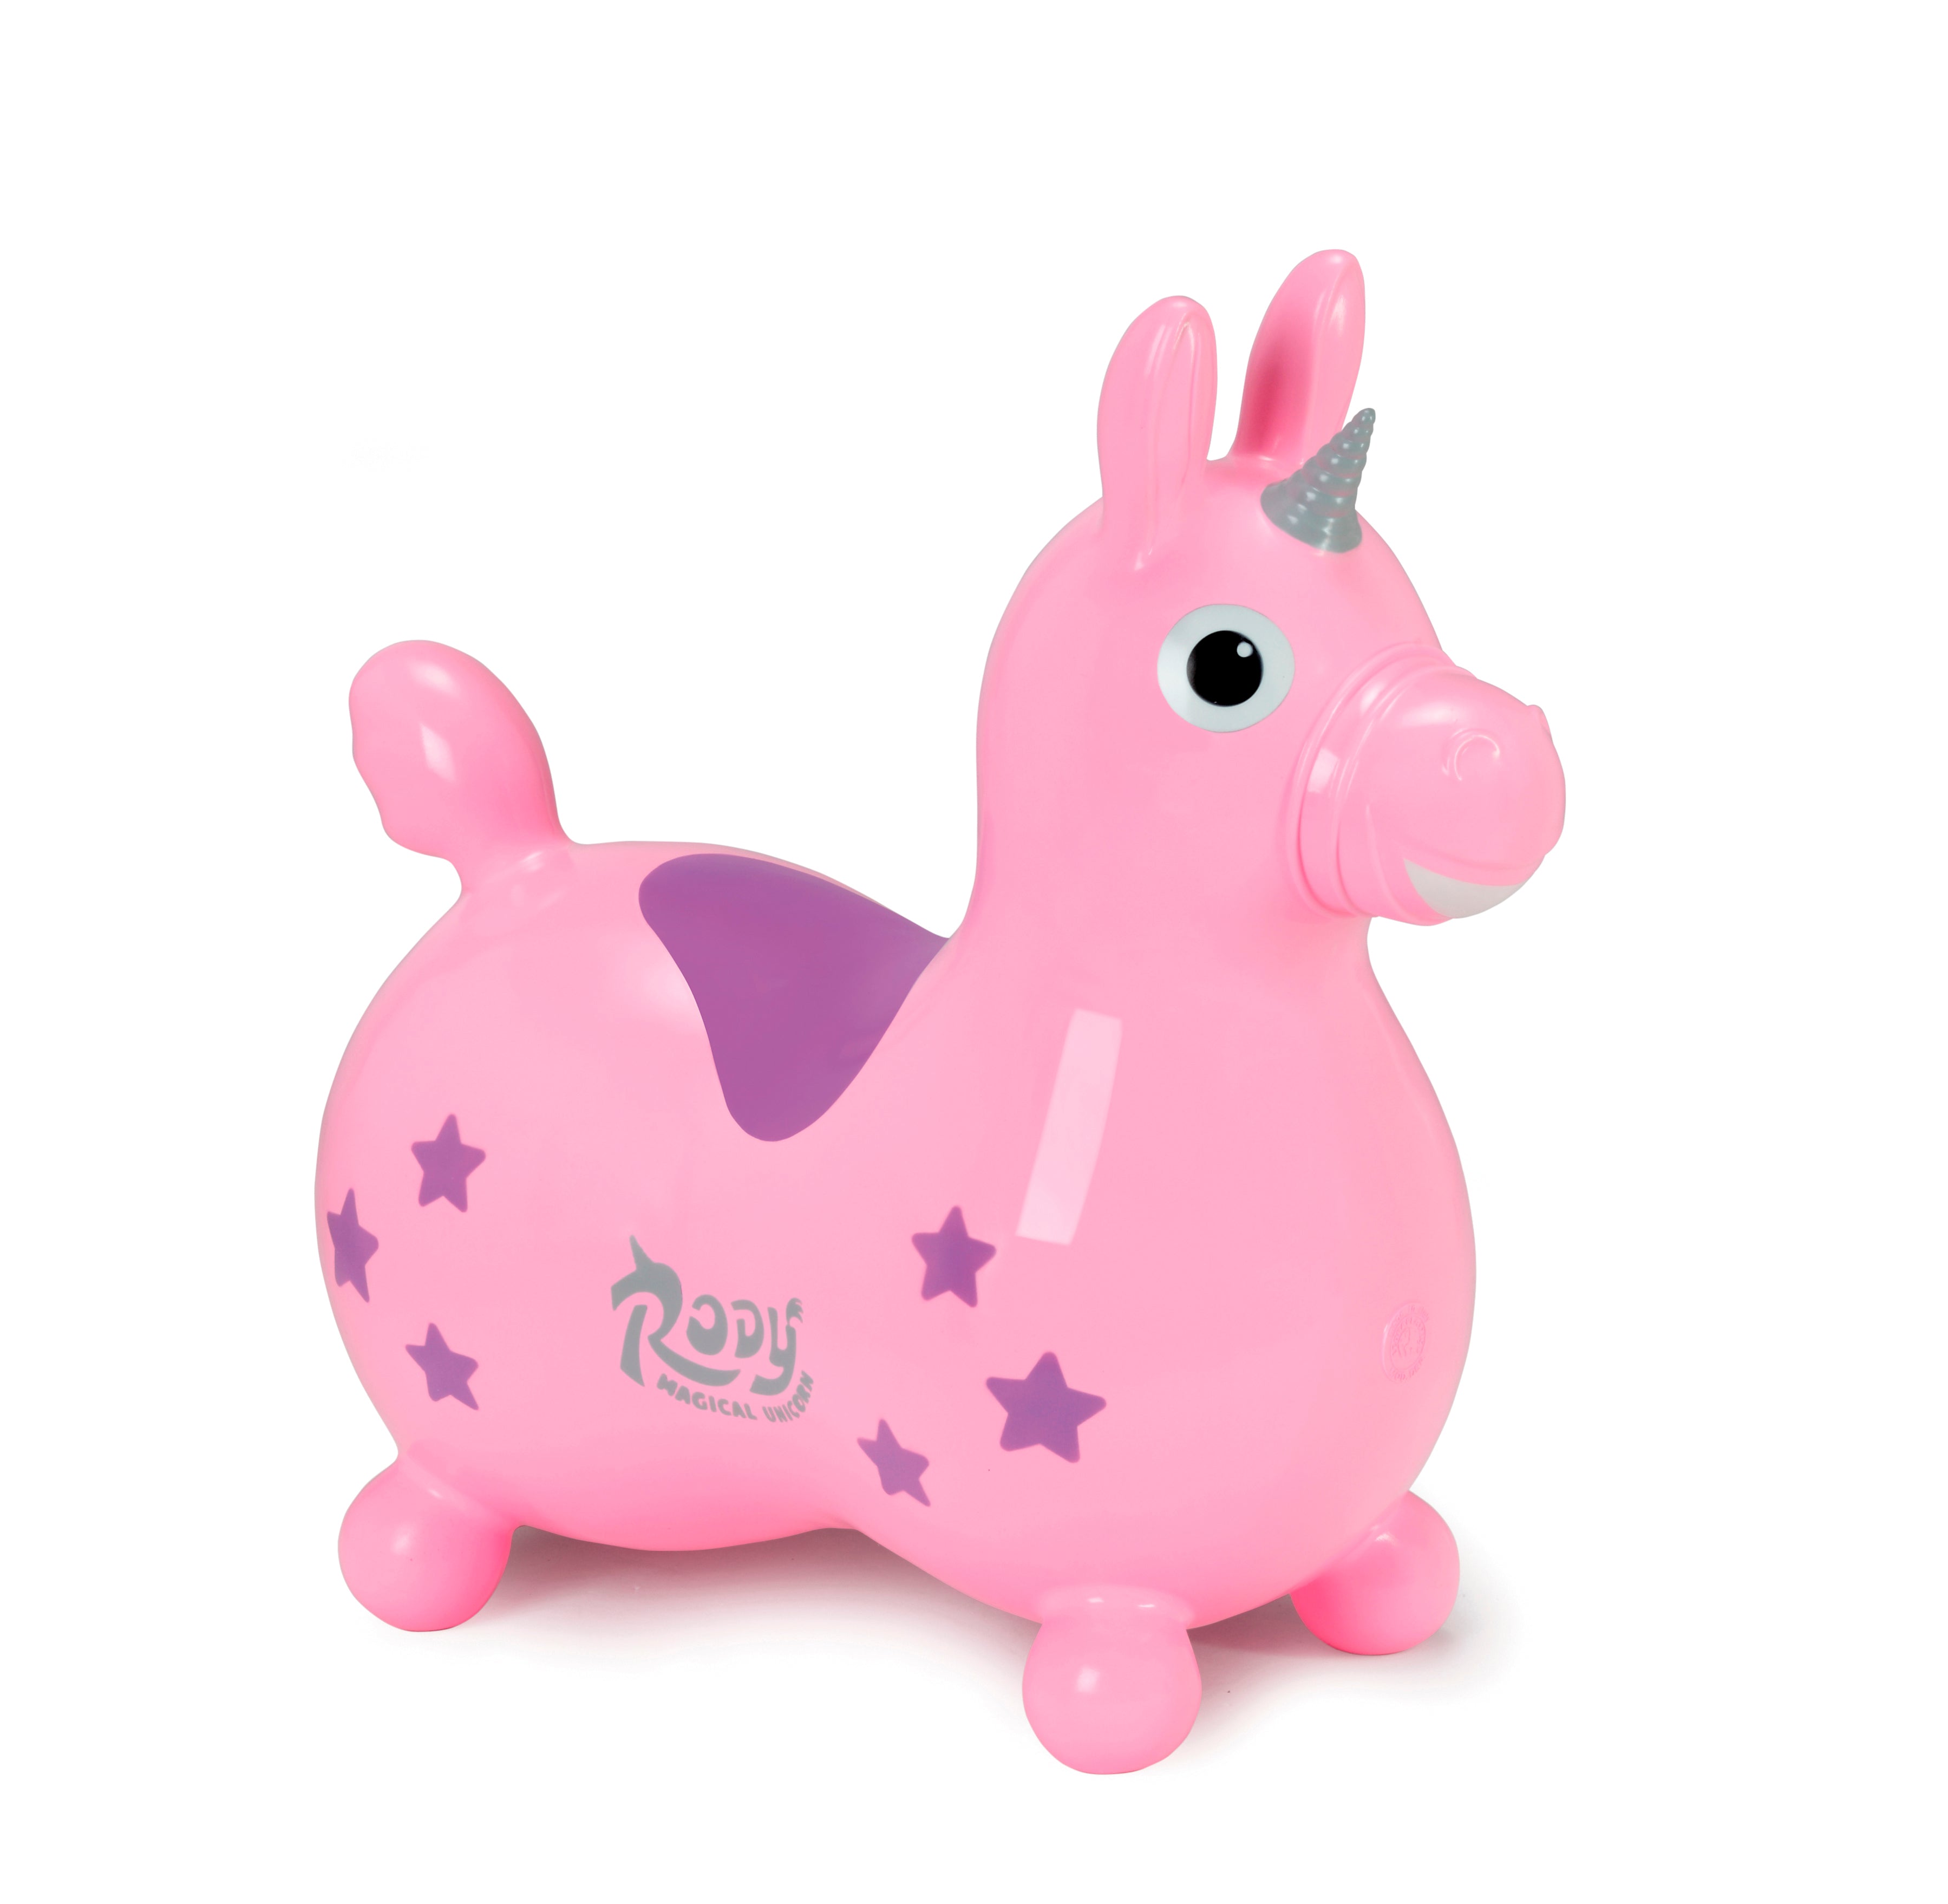 Studio image of the pink Rody Magical Unicorn.